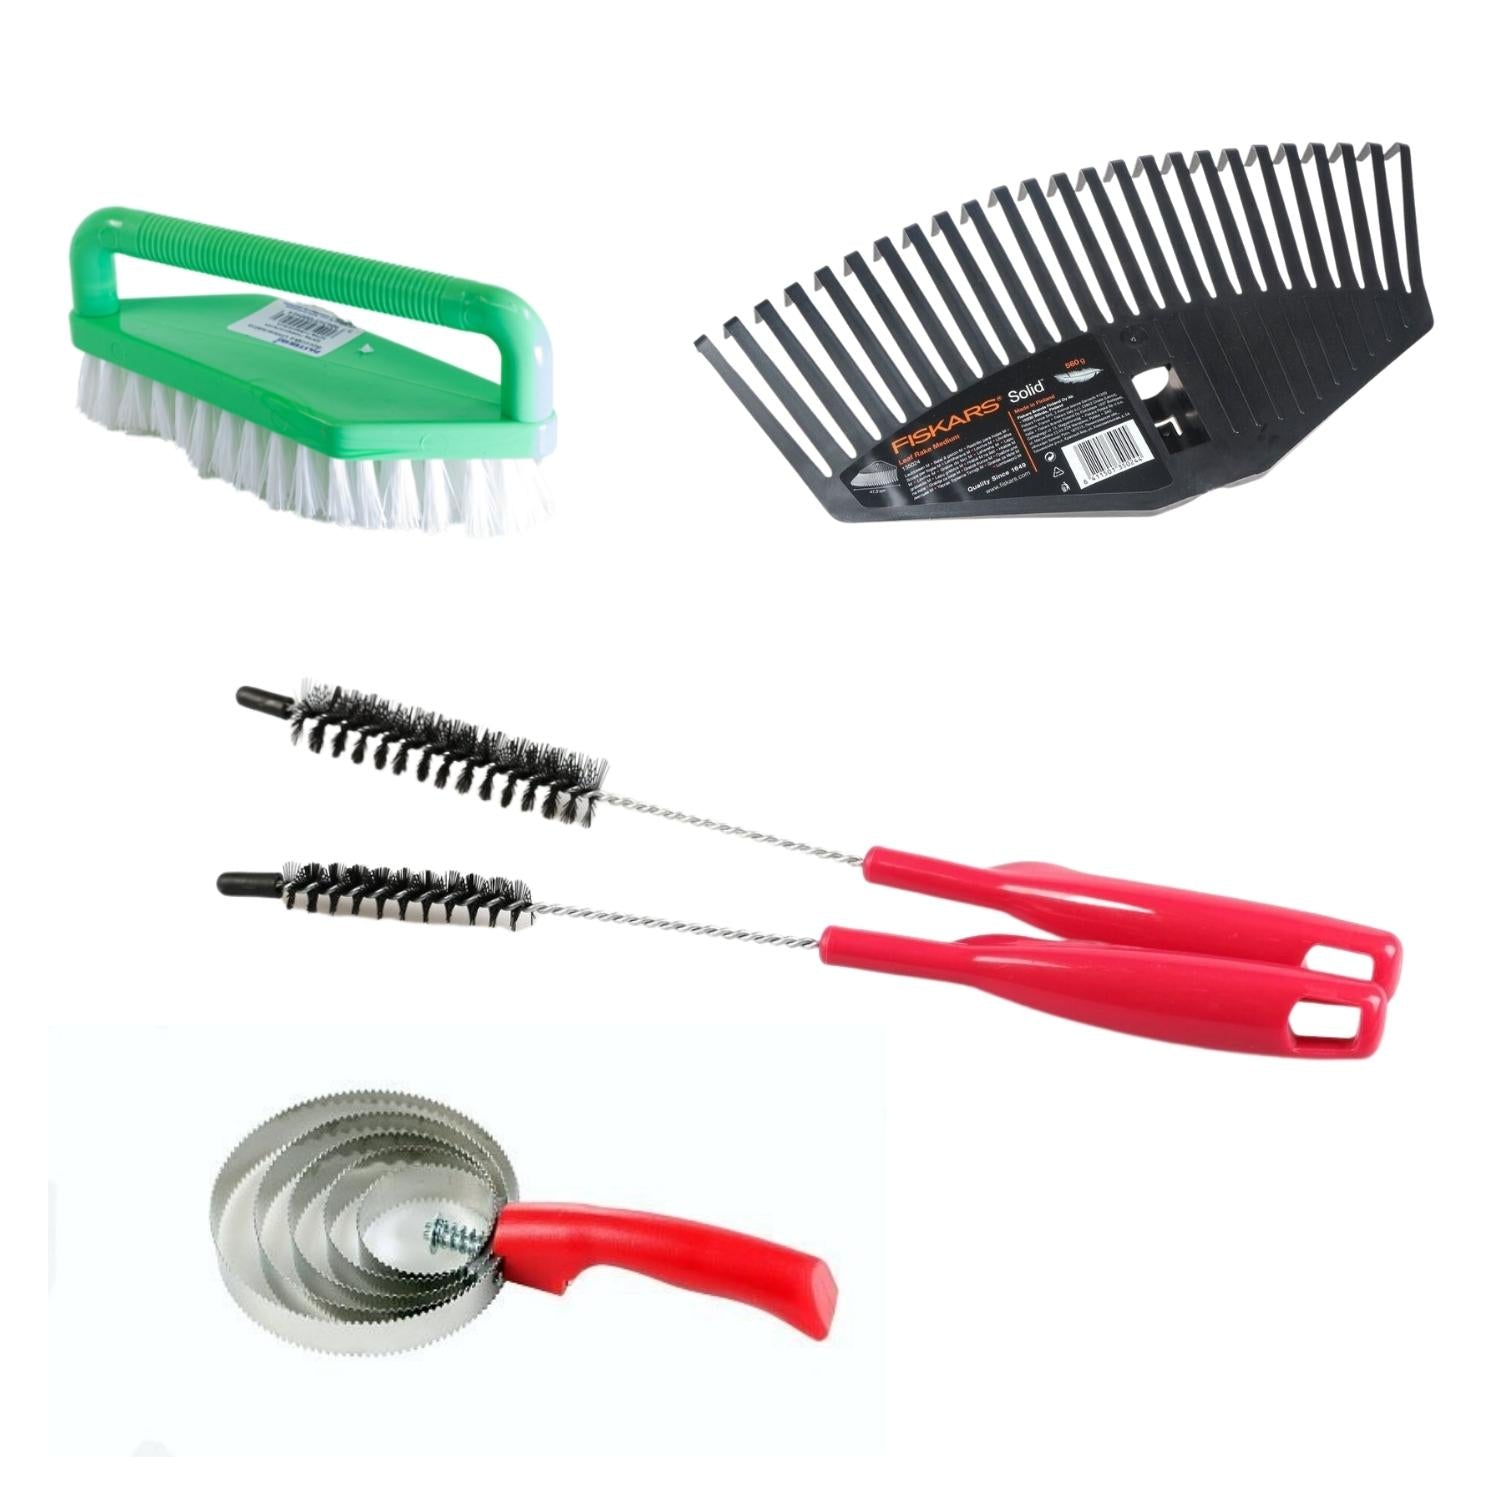 Tools, Brushes